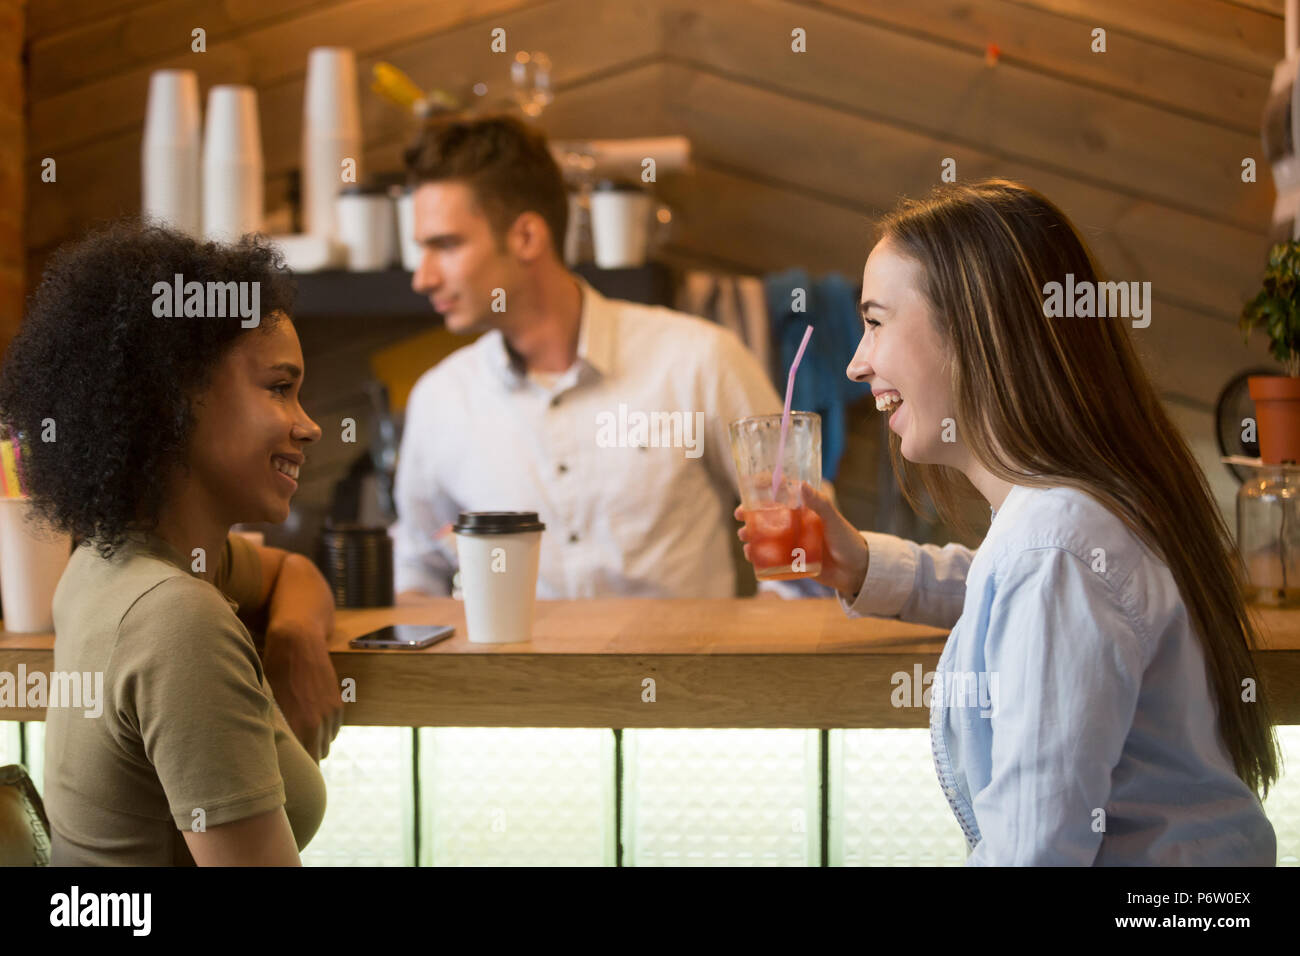 Multiracial girlfriends laughing, enjoying drinks at bar counter Stock Photo